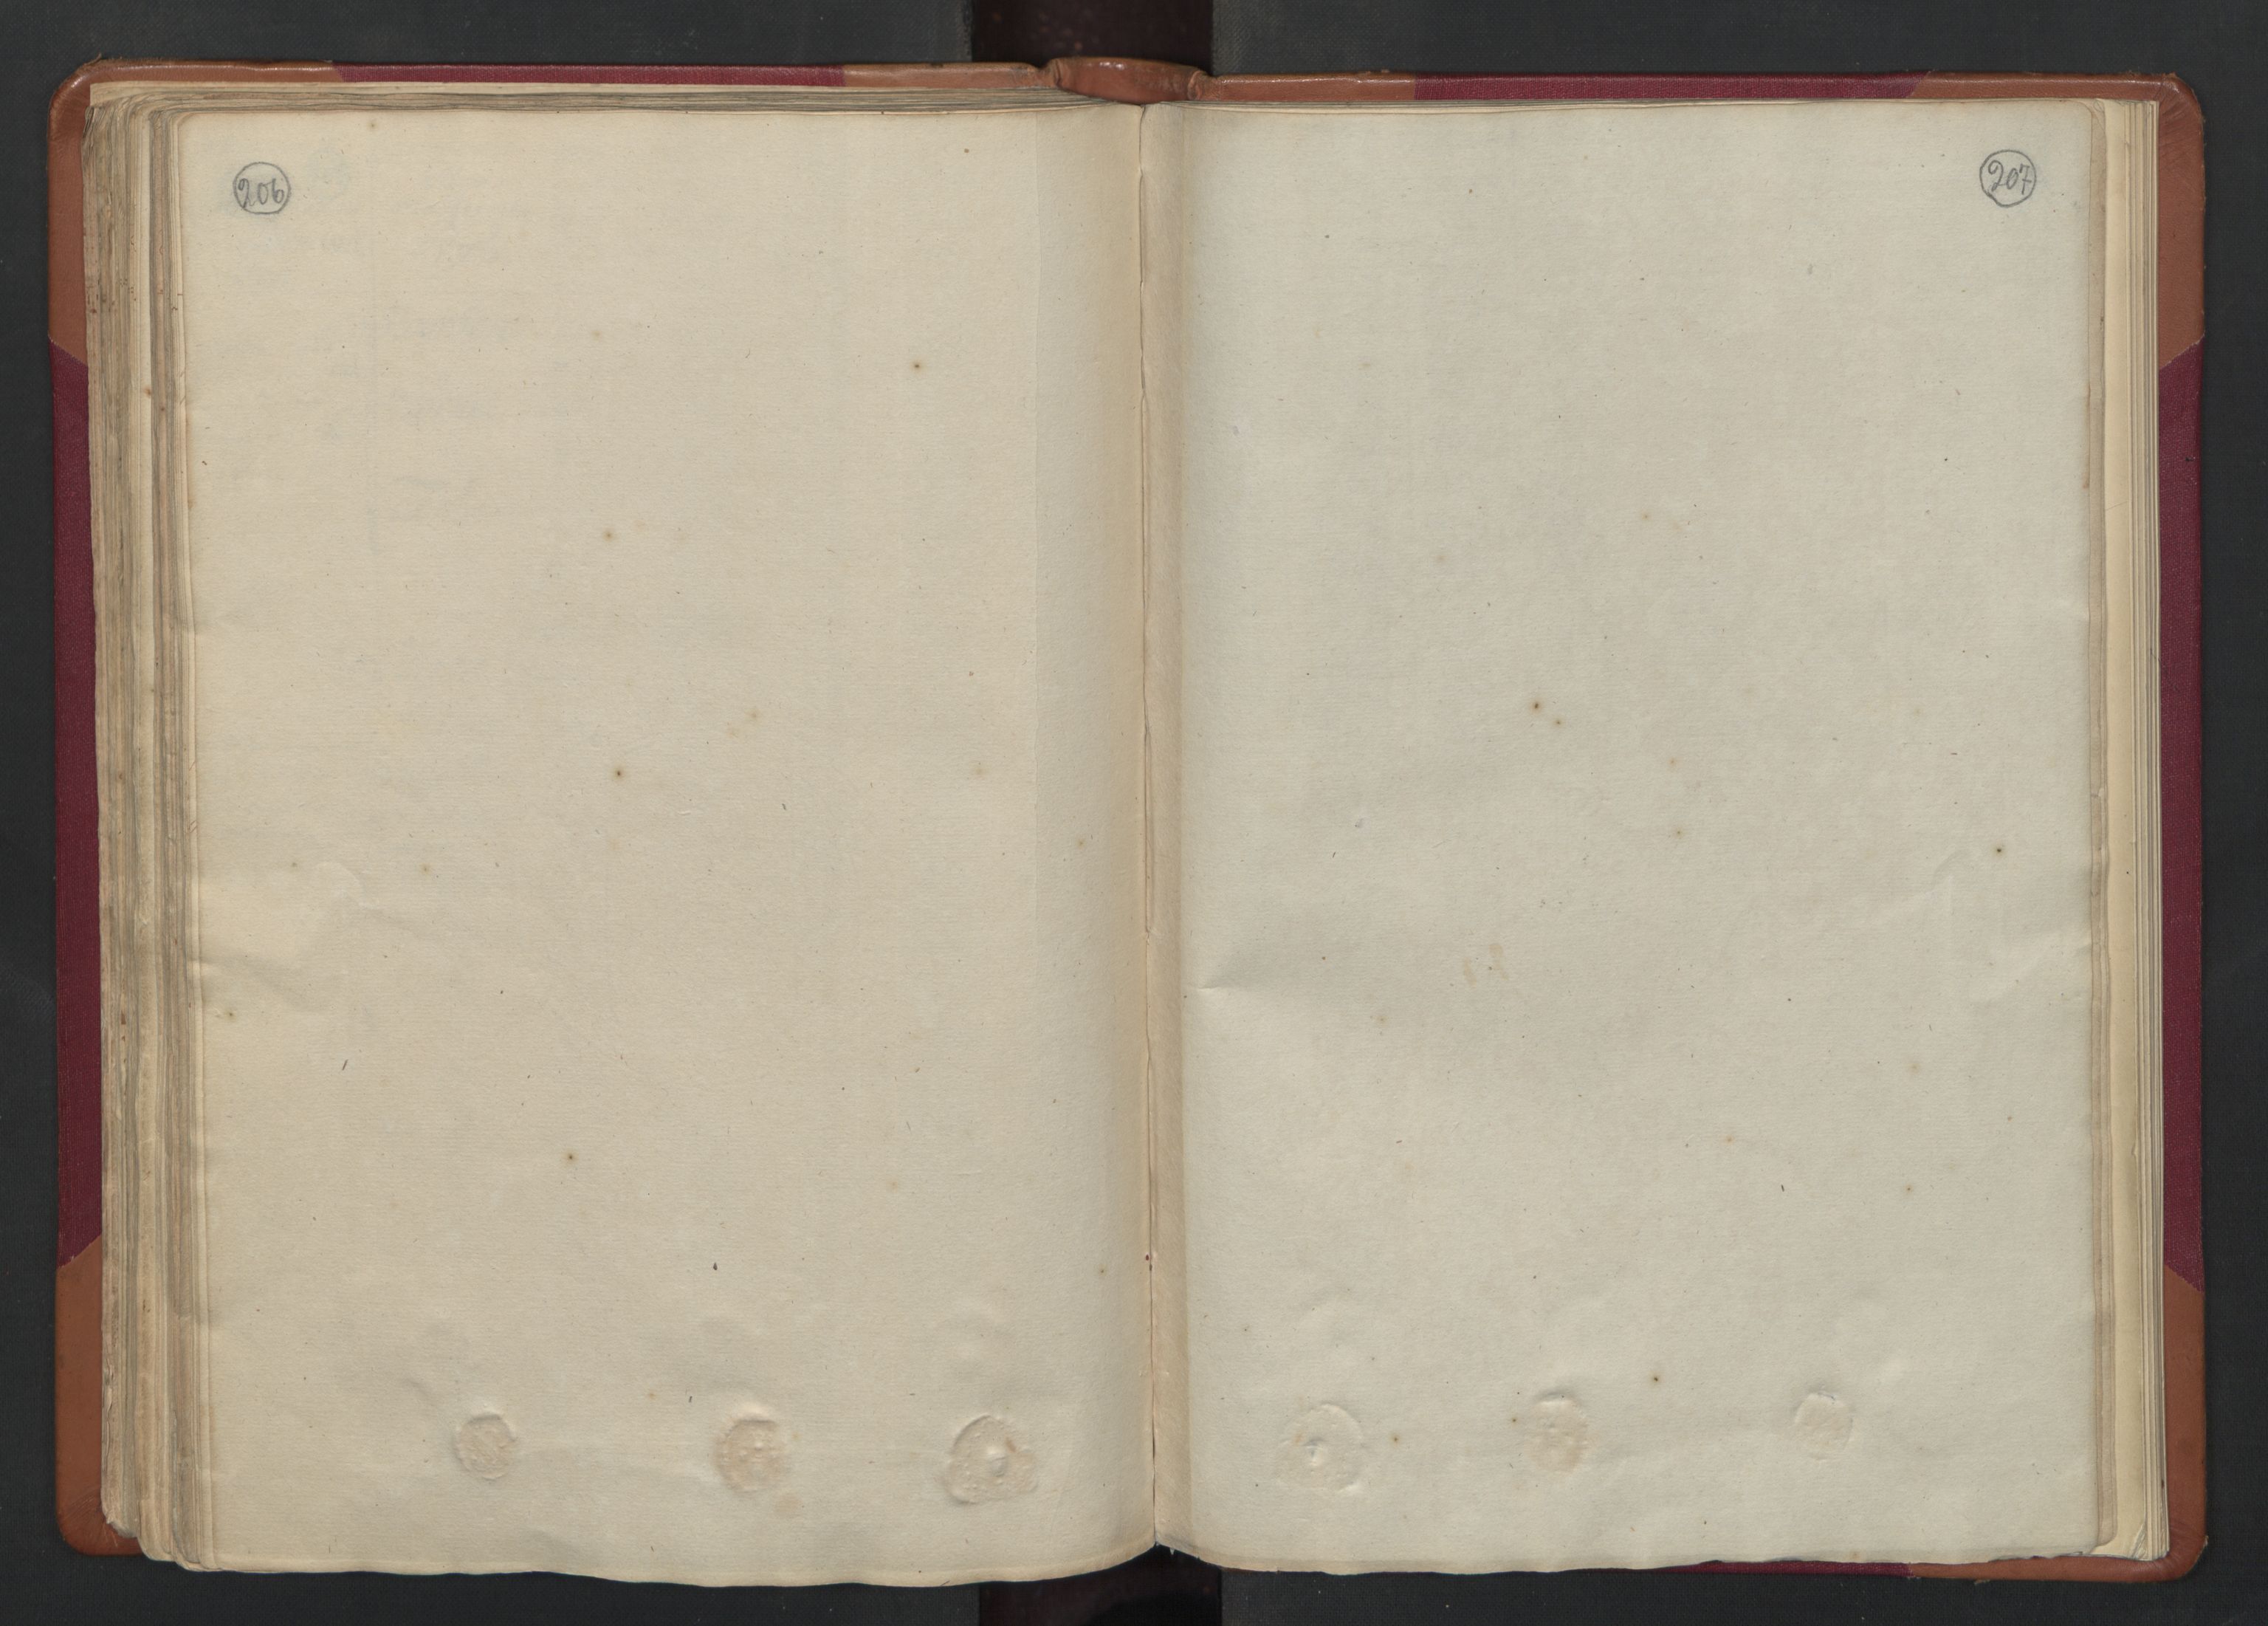 RA, Manntallet 1701, nr. 17: Salten fogderi, 1701, s. 206-207